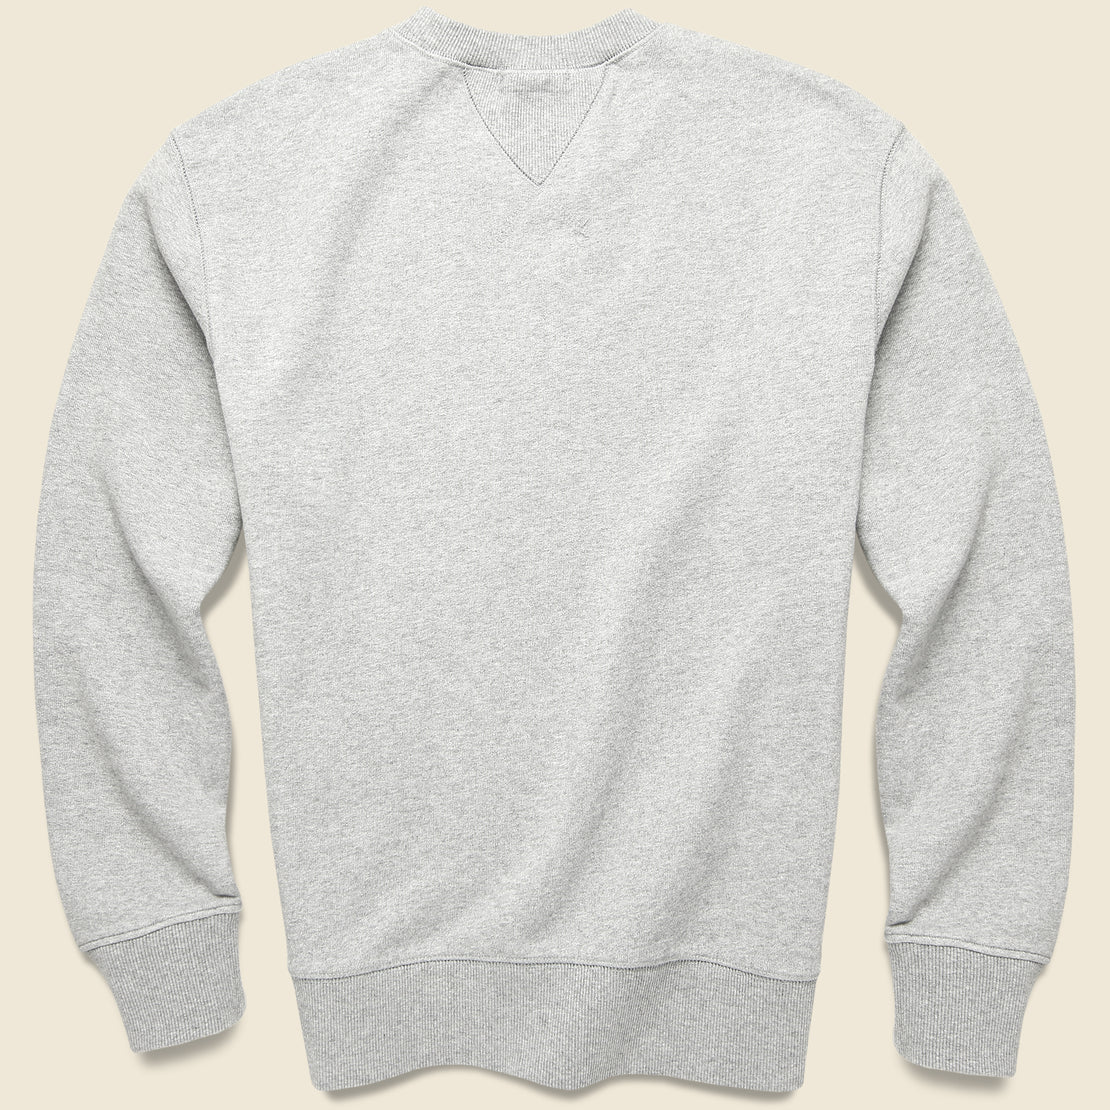 Garment Dyed Crewneck Sweatshirt - Heather Grey - Alex Mill - STAG Provisions - Tops - Fleece / Sweatshirt